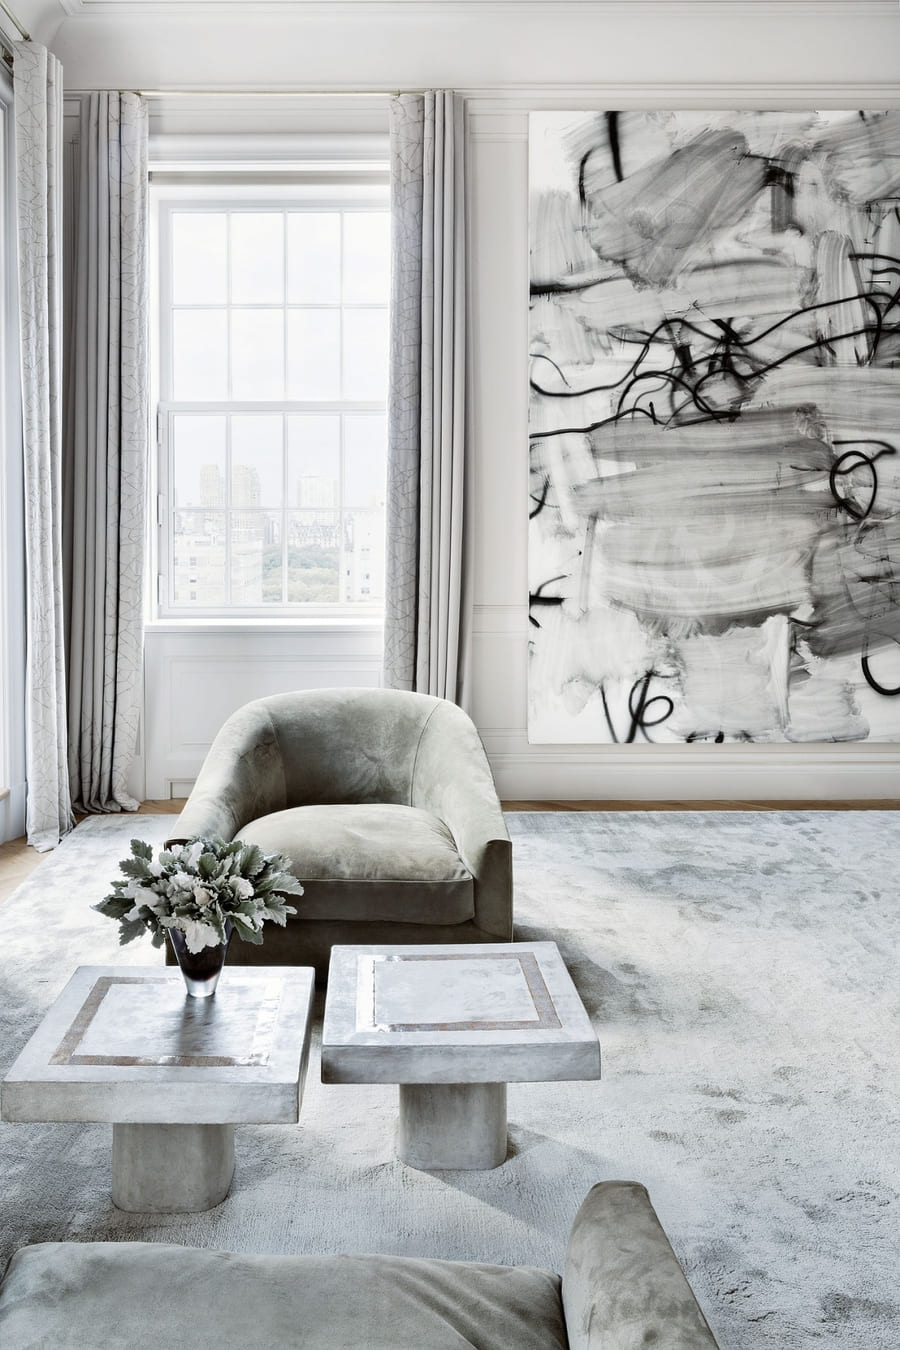 Julie Hillman Design: 10 Stunning Interior Design Inspirations